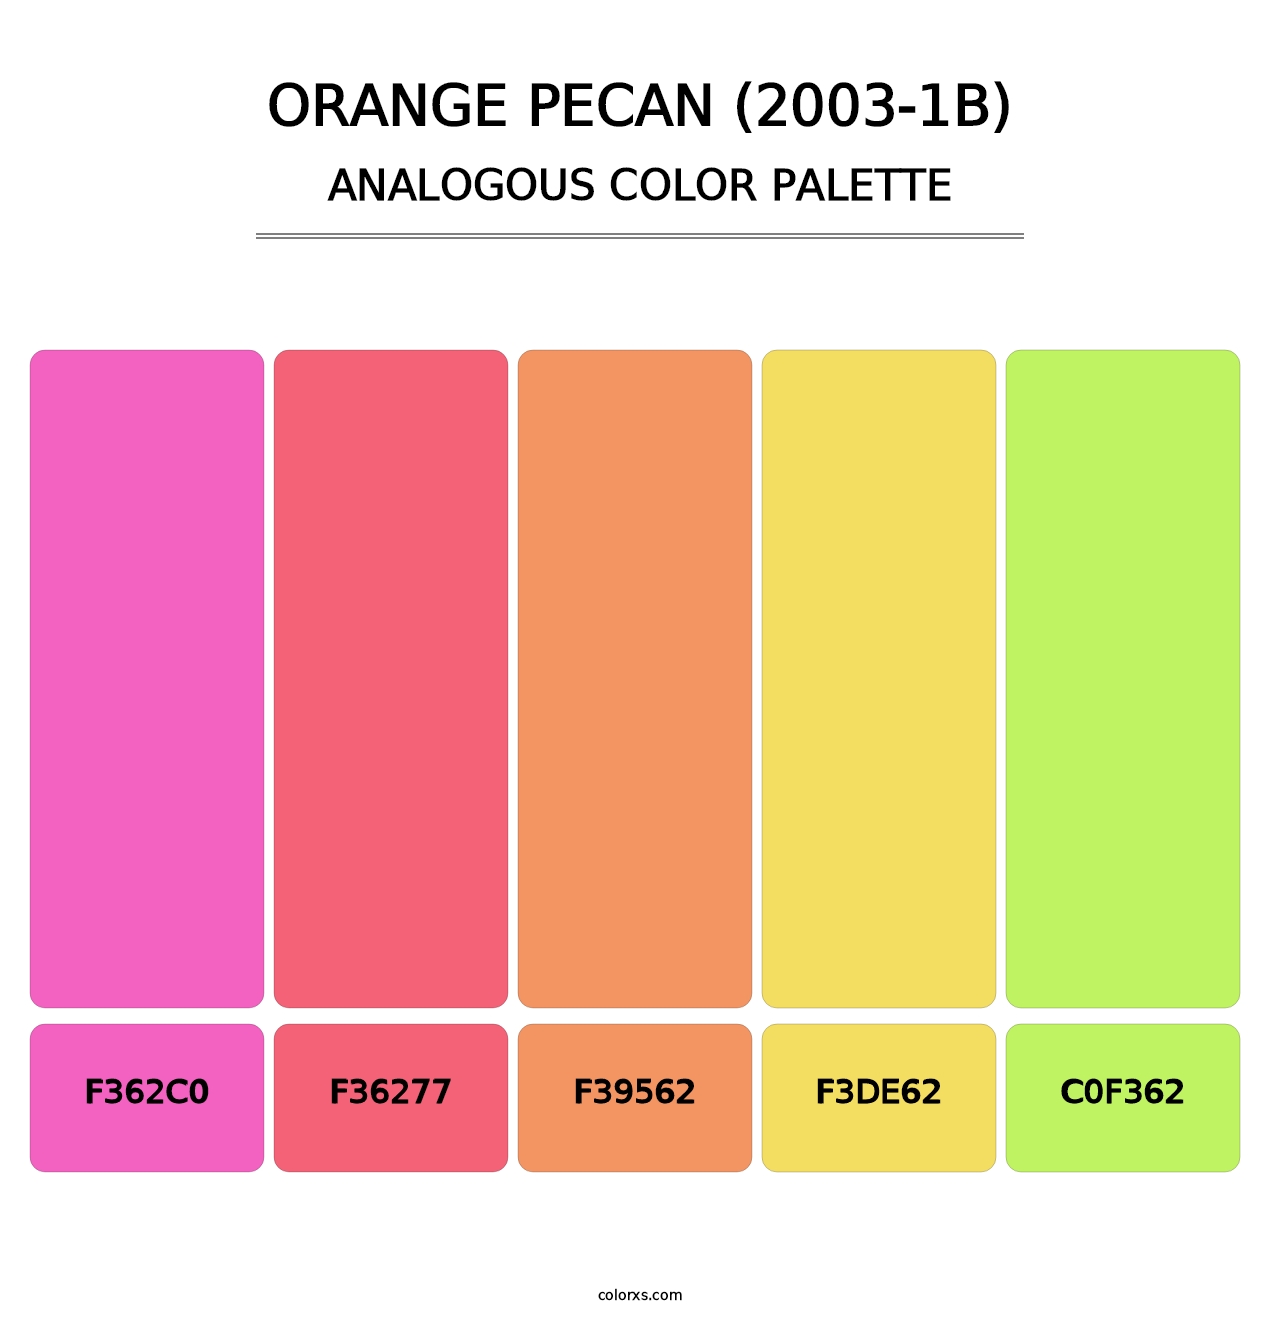 Orange Pecan (2003-1B) - Analogous Color Palette